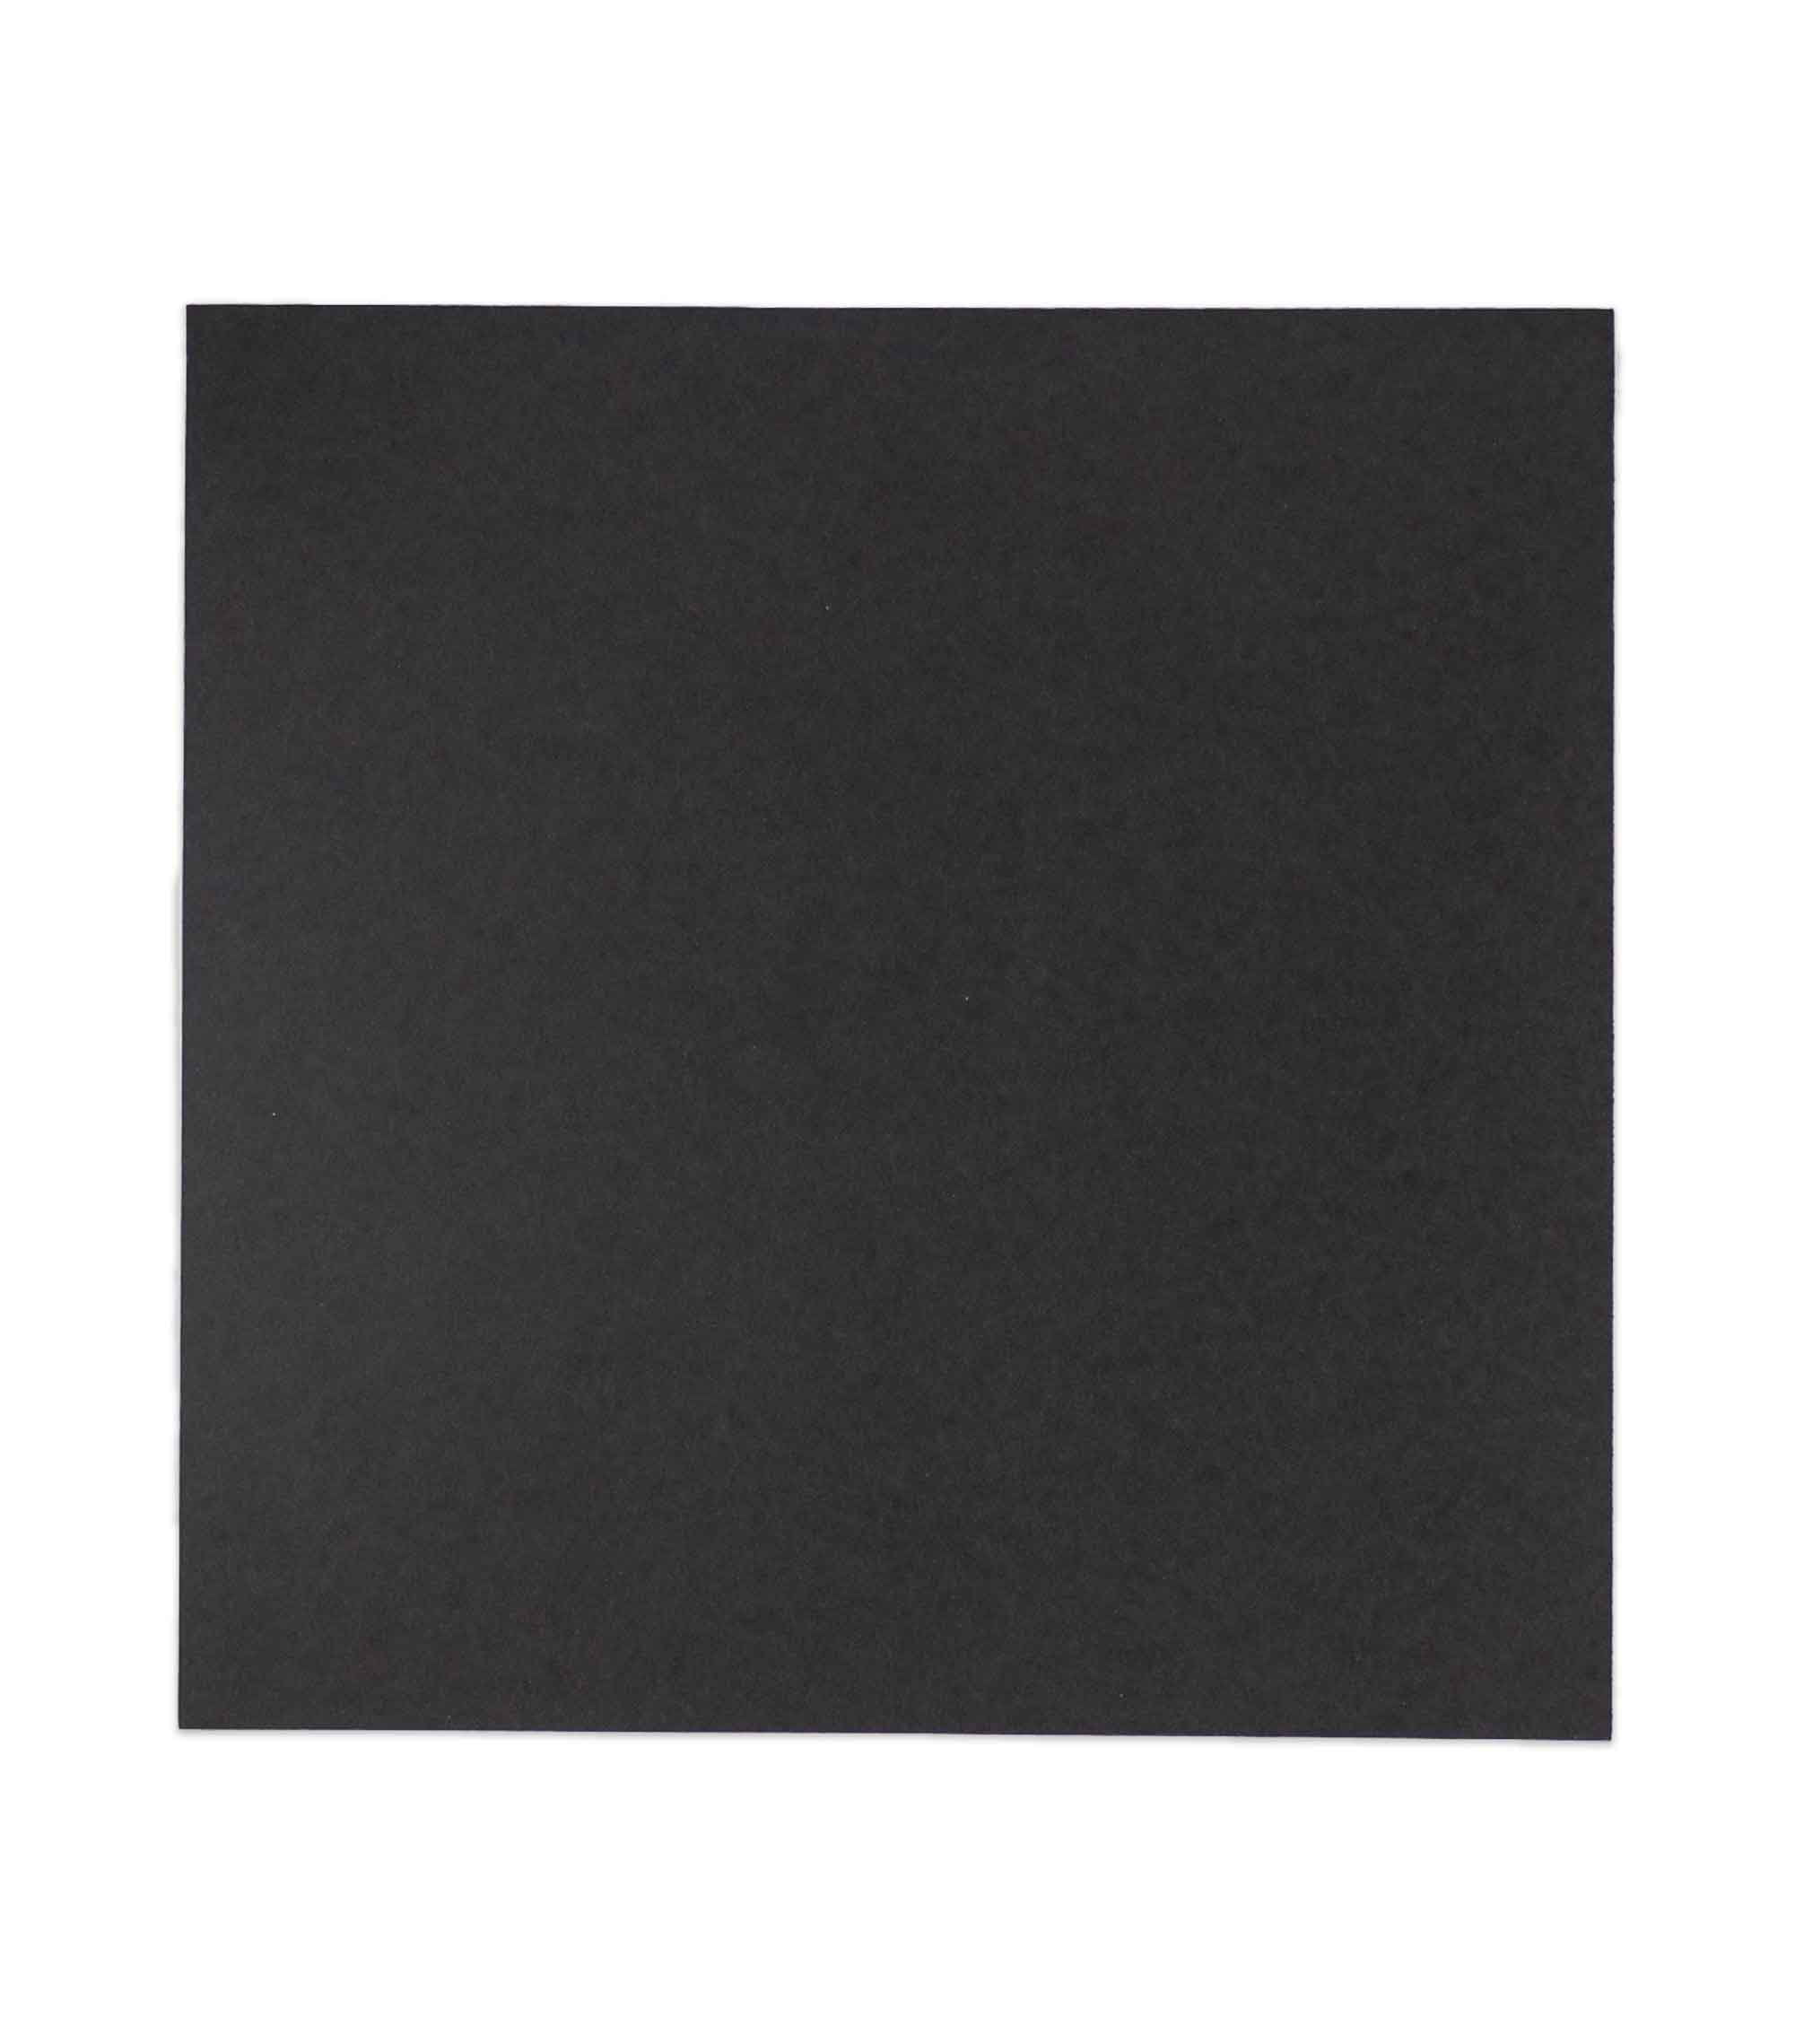 3/16 Black 1 Side Self Adhesive Foam Core Boards :16 X 20